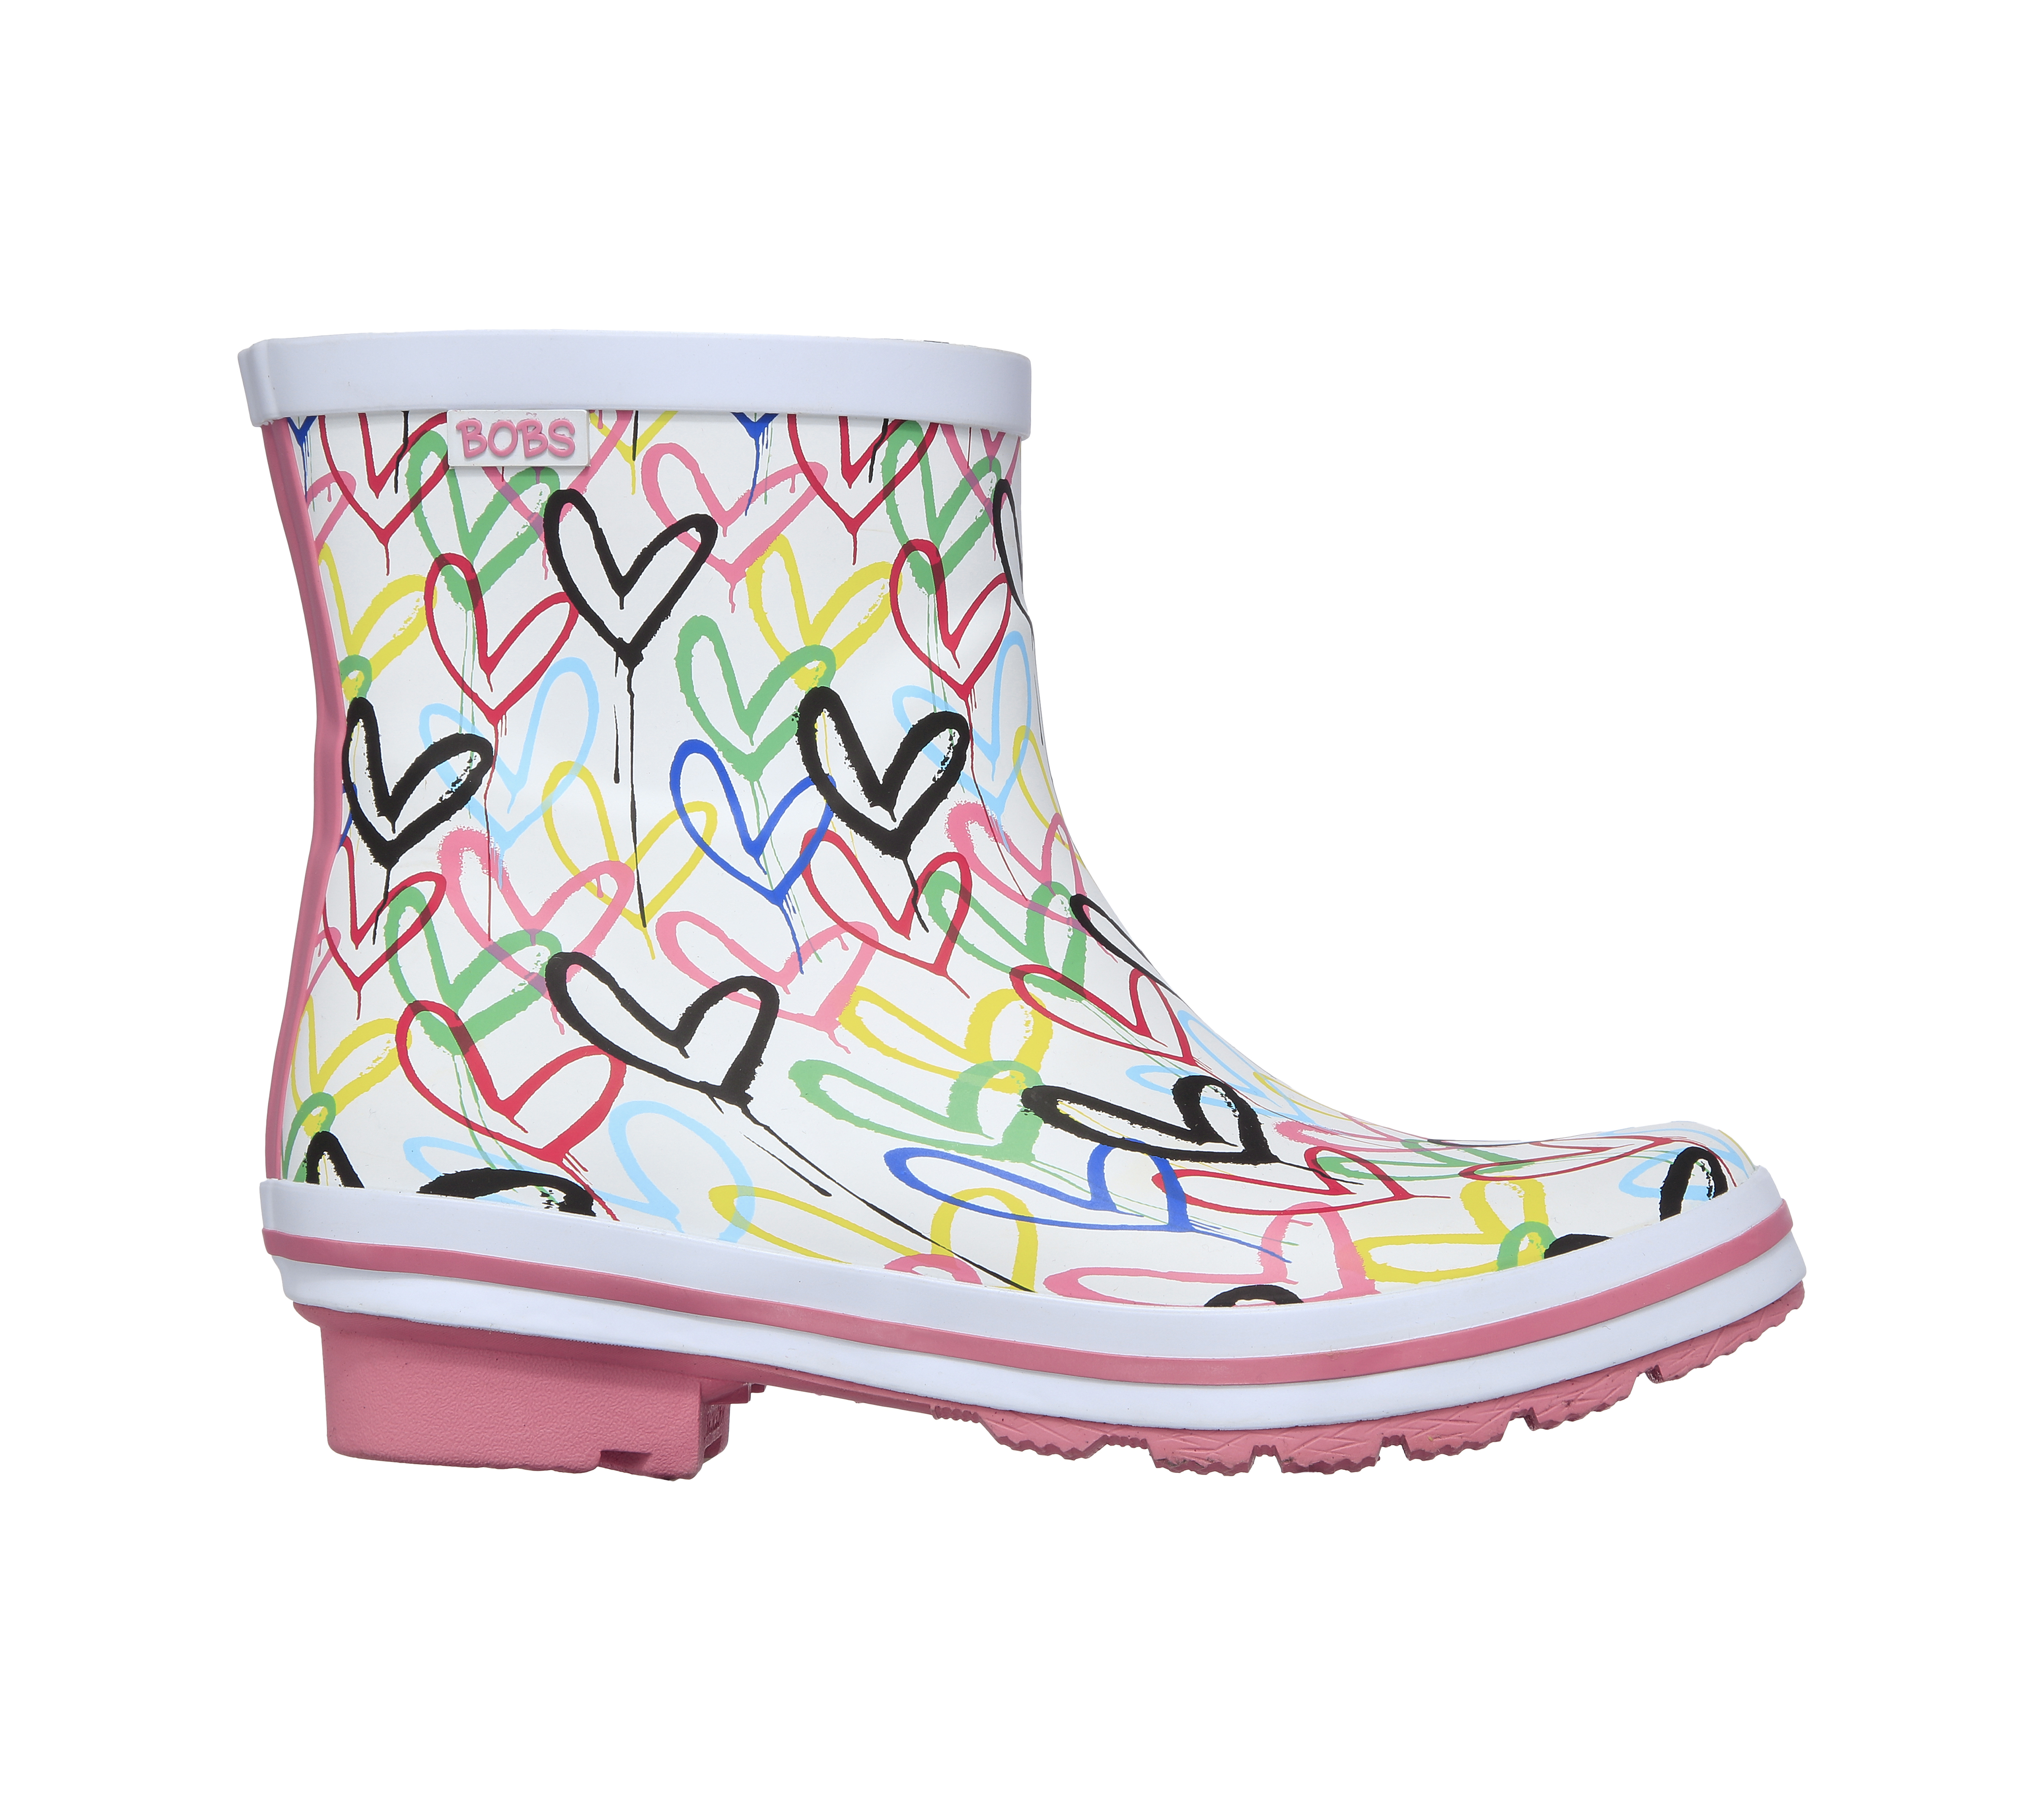 skechers light up rain boots